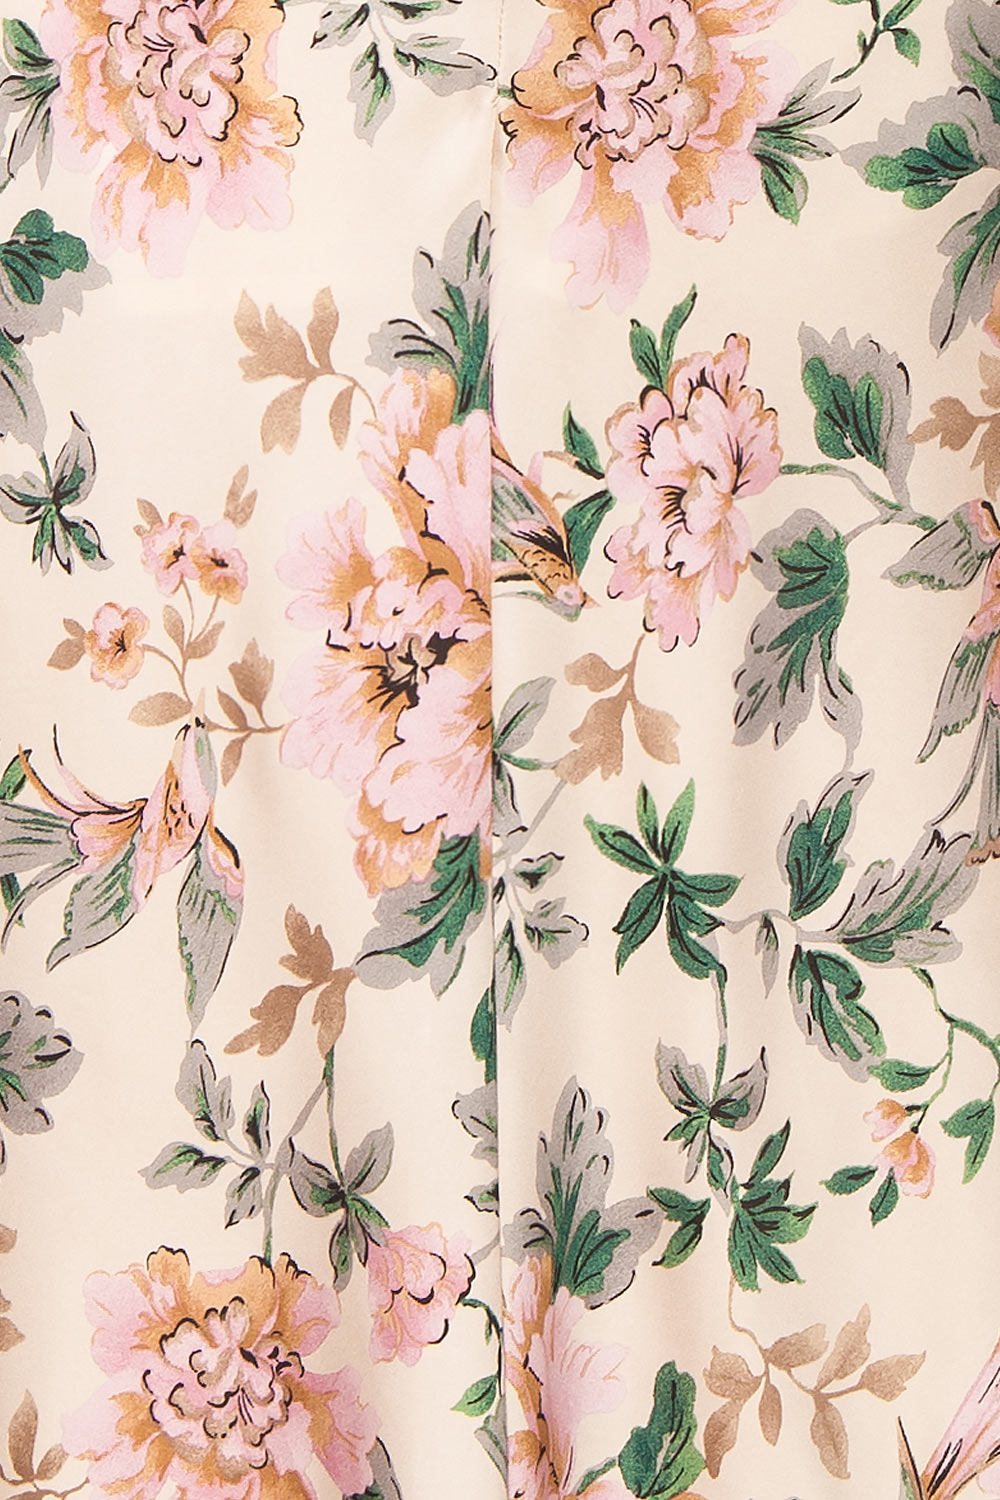 Joulanne Floral Maxi Dress with High Slit | Boutique 1861 texture